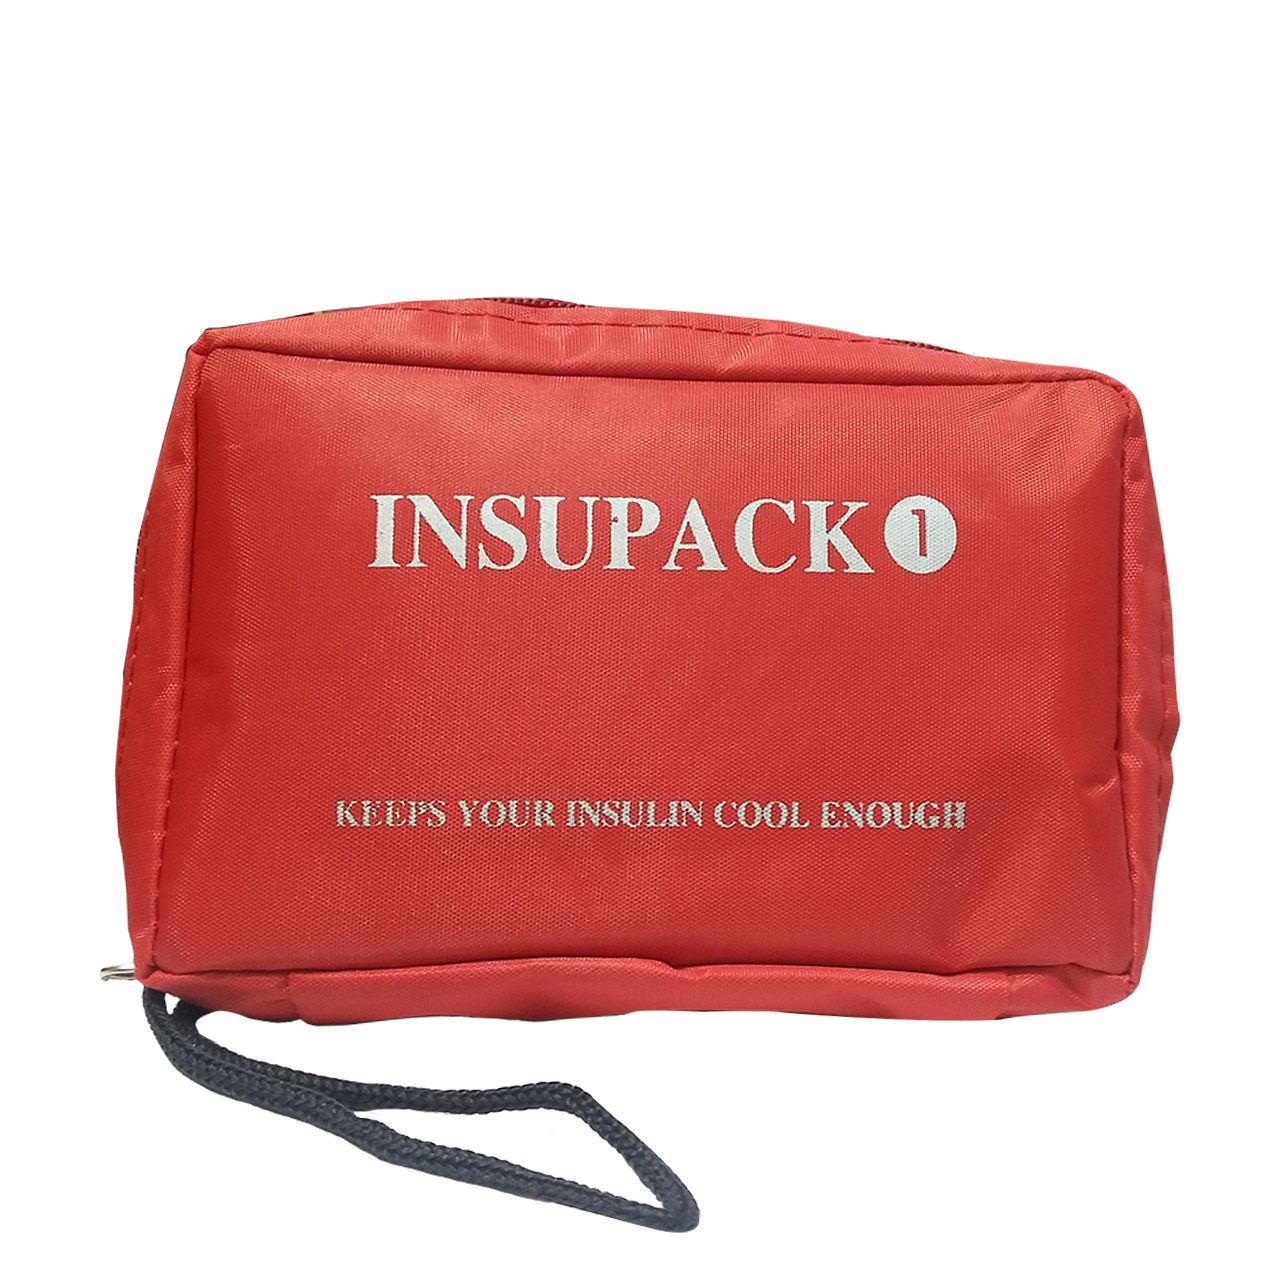  کیف خنک نگهدارنده انسولین مدل Insupack -  - 1